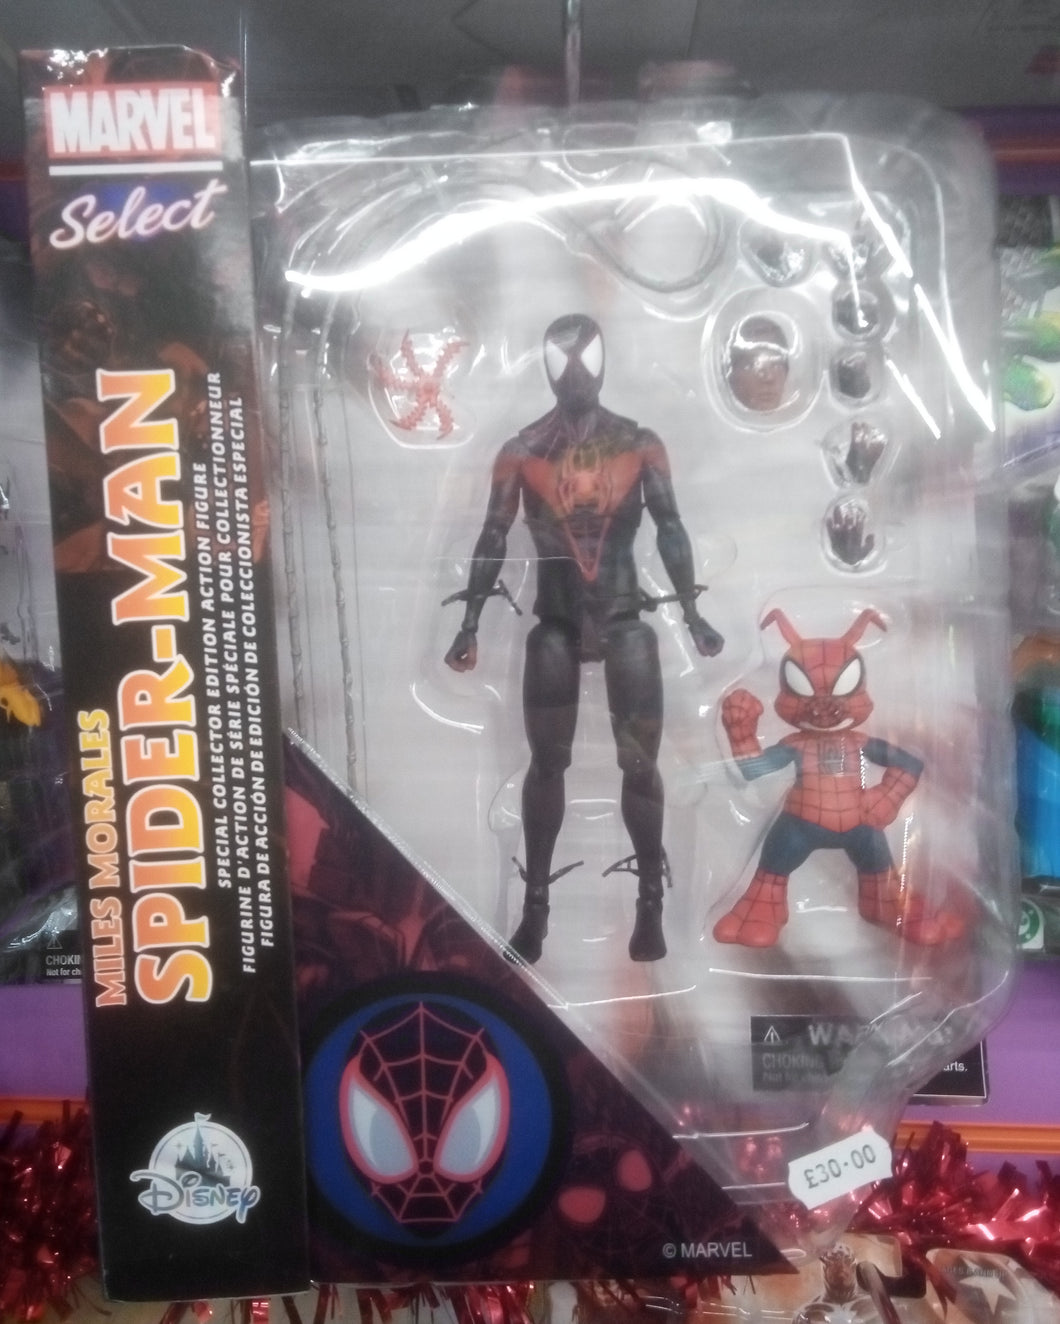 Marvel select miles Morales Spiderman figure set